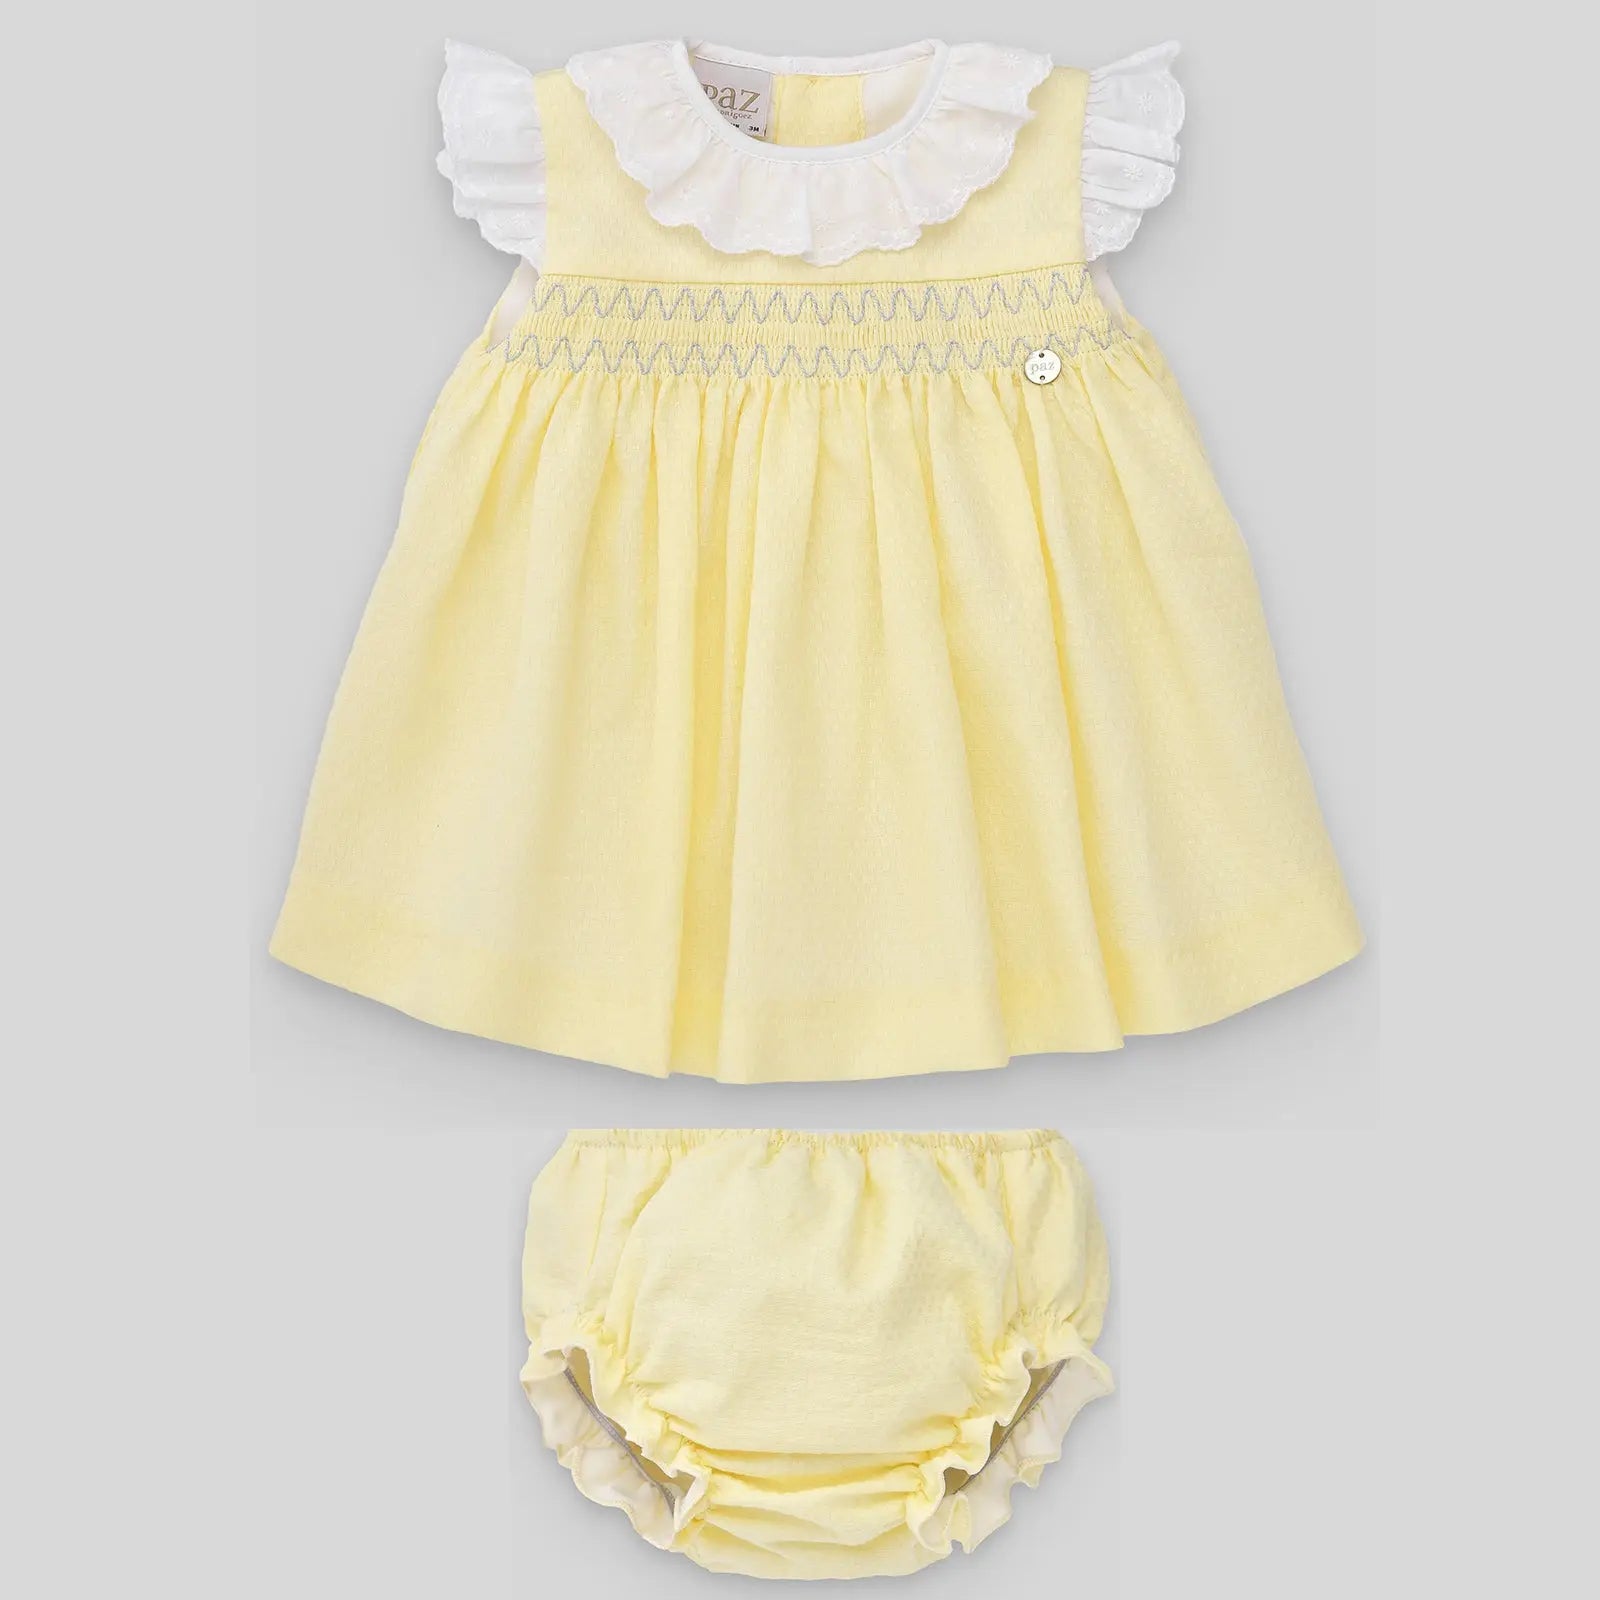 Blue Almonds Ltd Girl's Dress Set in Yellow paz rodriguez